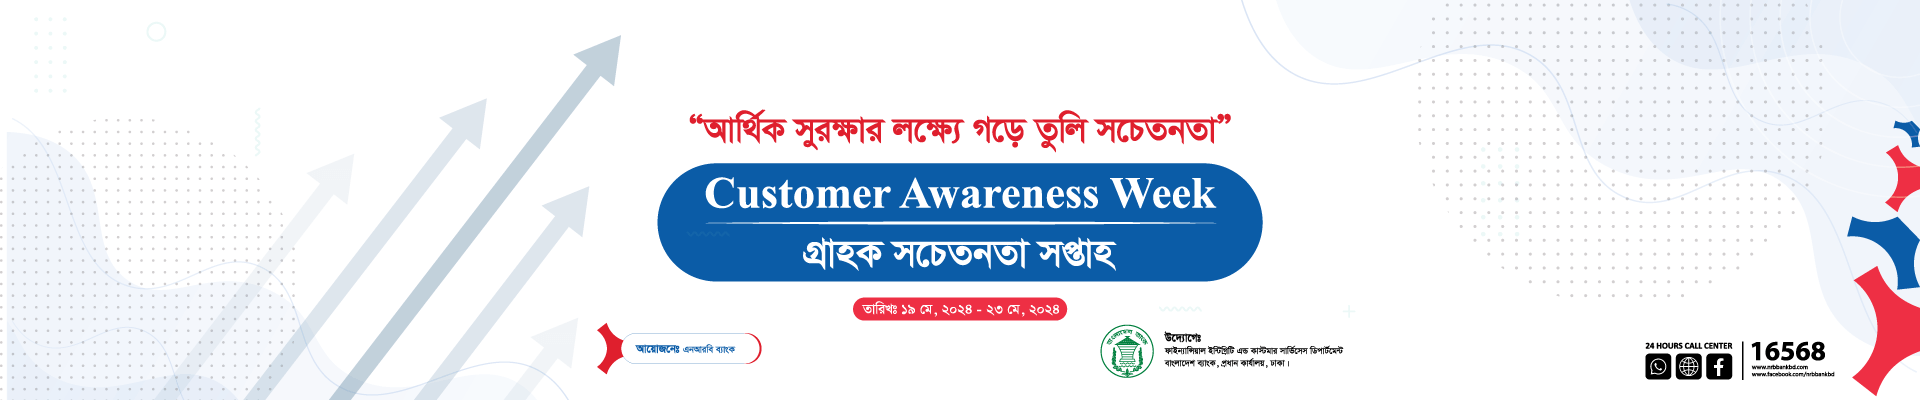 Customer Awareness Week